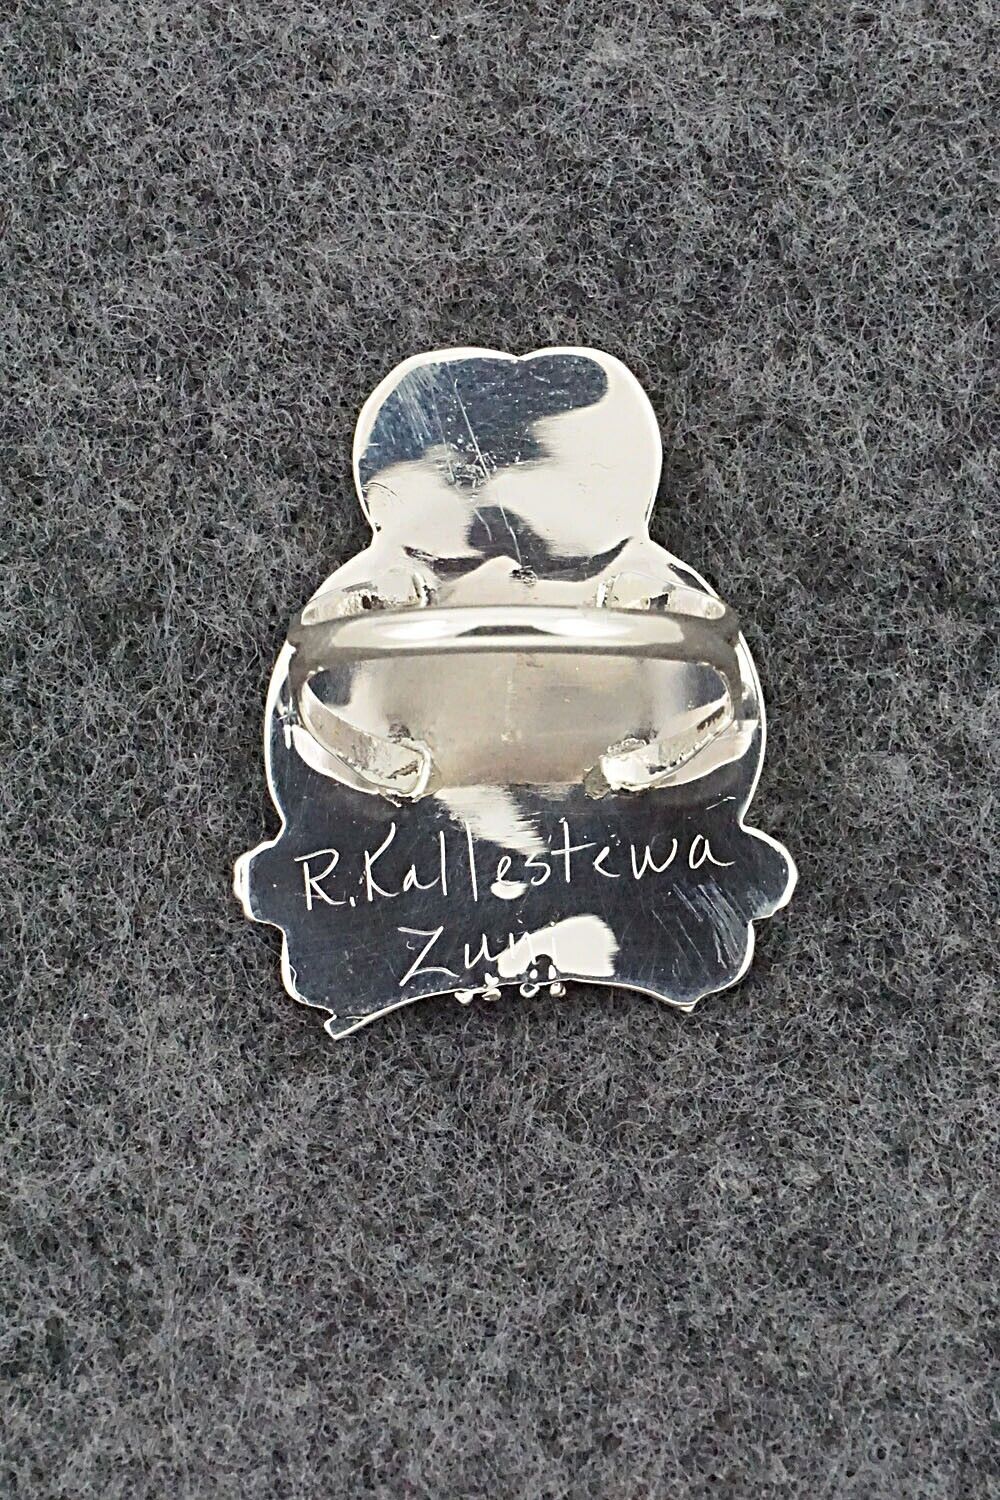 Multi-Stone & Sterling Silver Ring - Reginda Kallestewa - Size 8